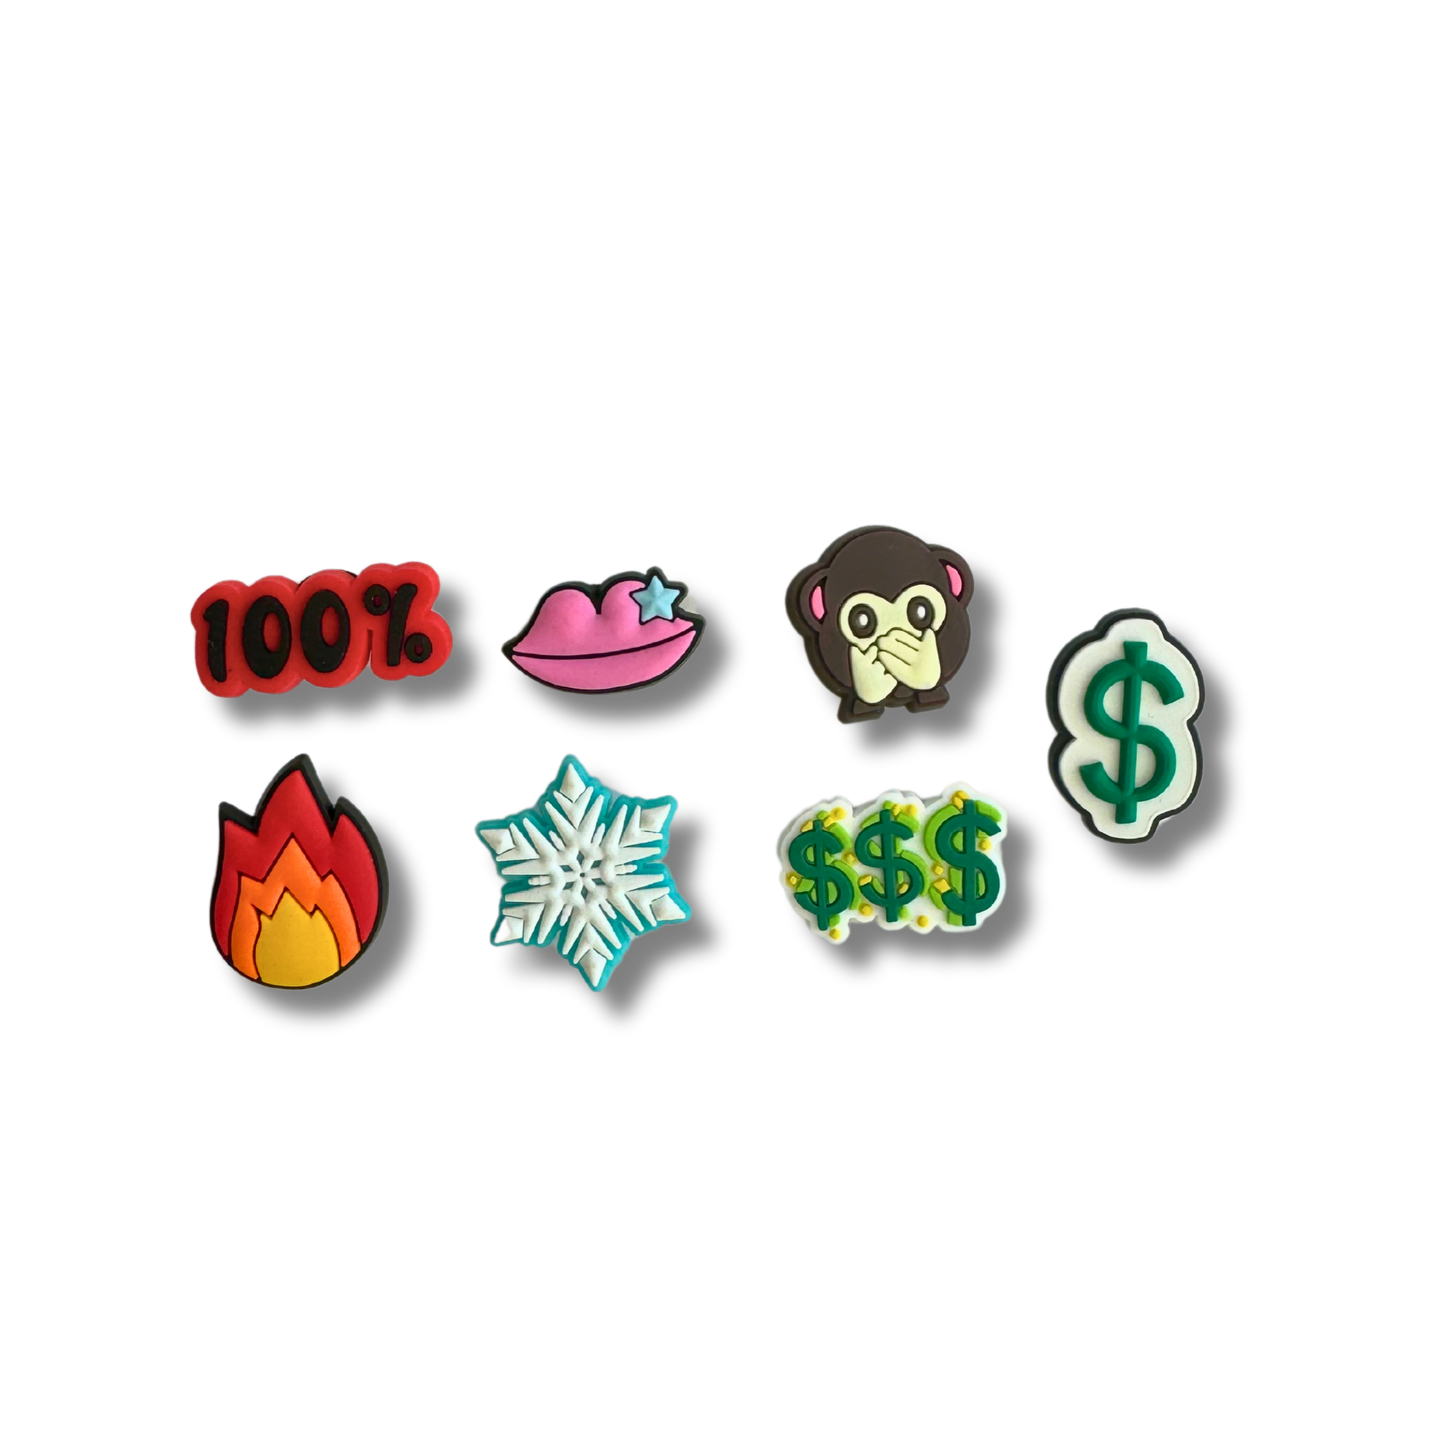 Emoji Fun Shoe Charms